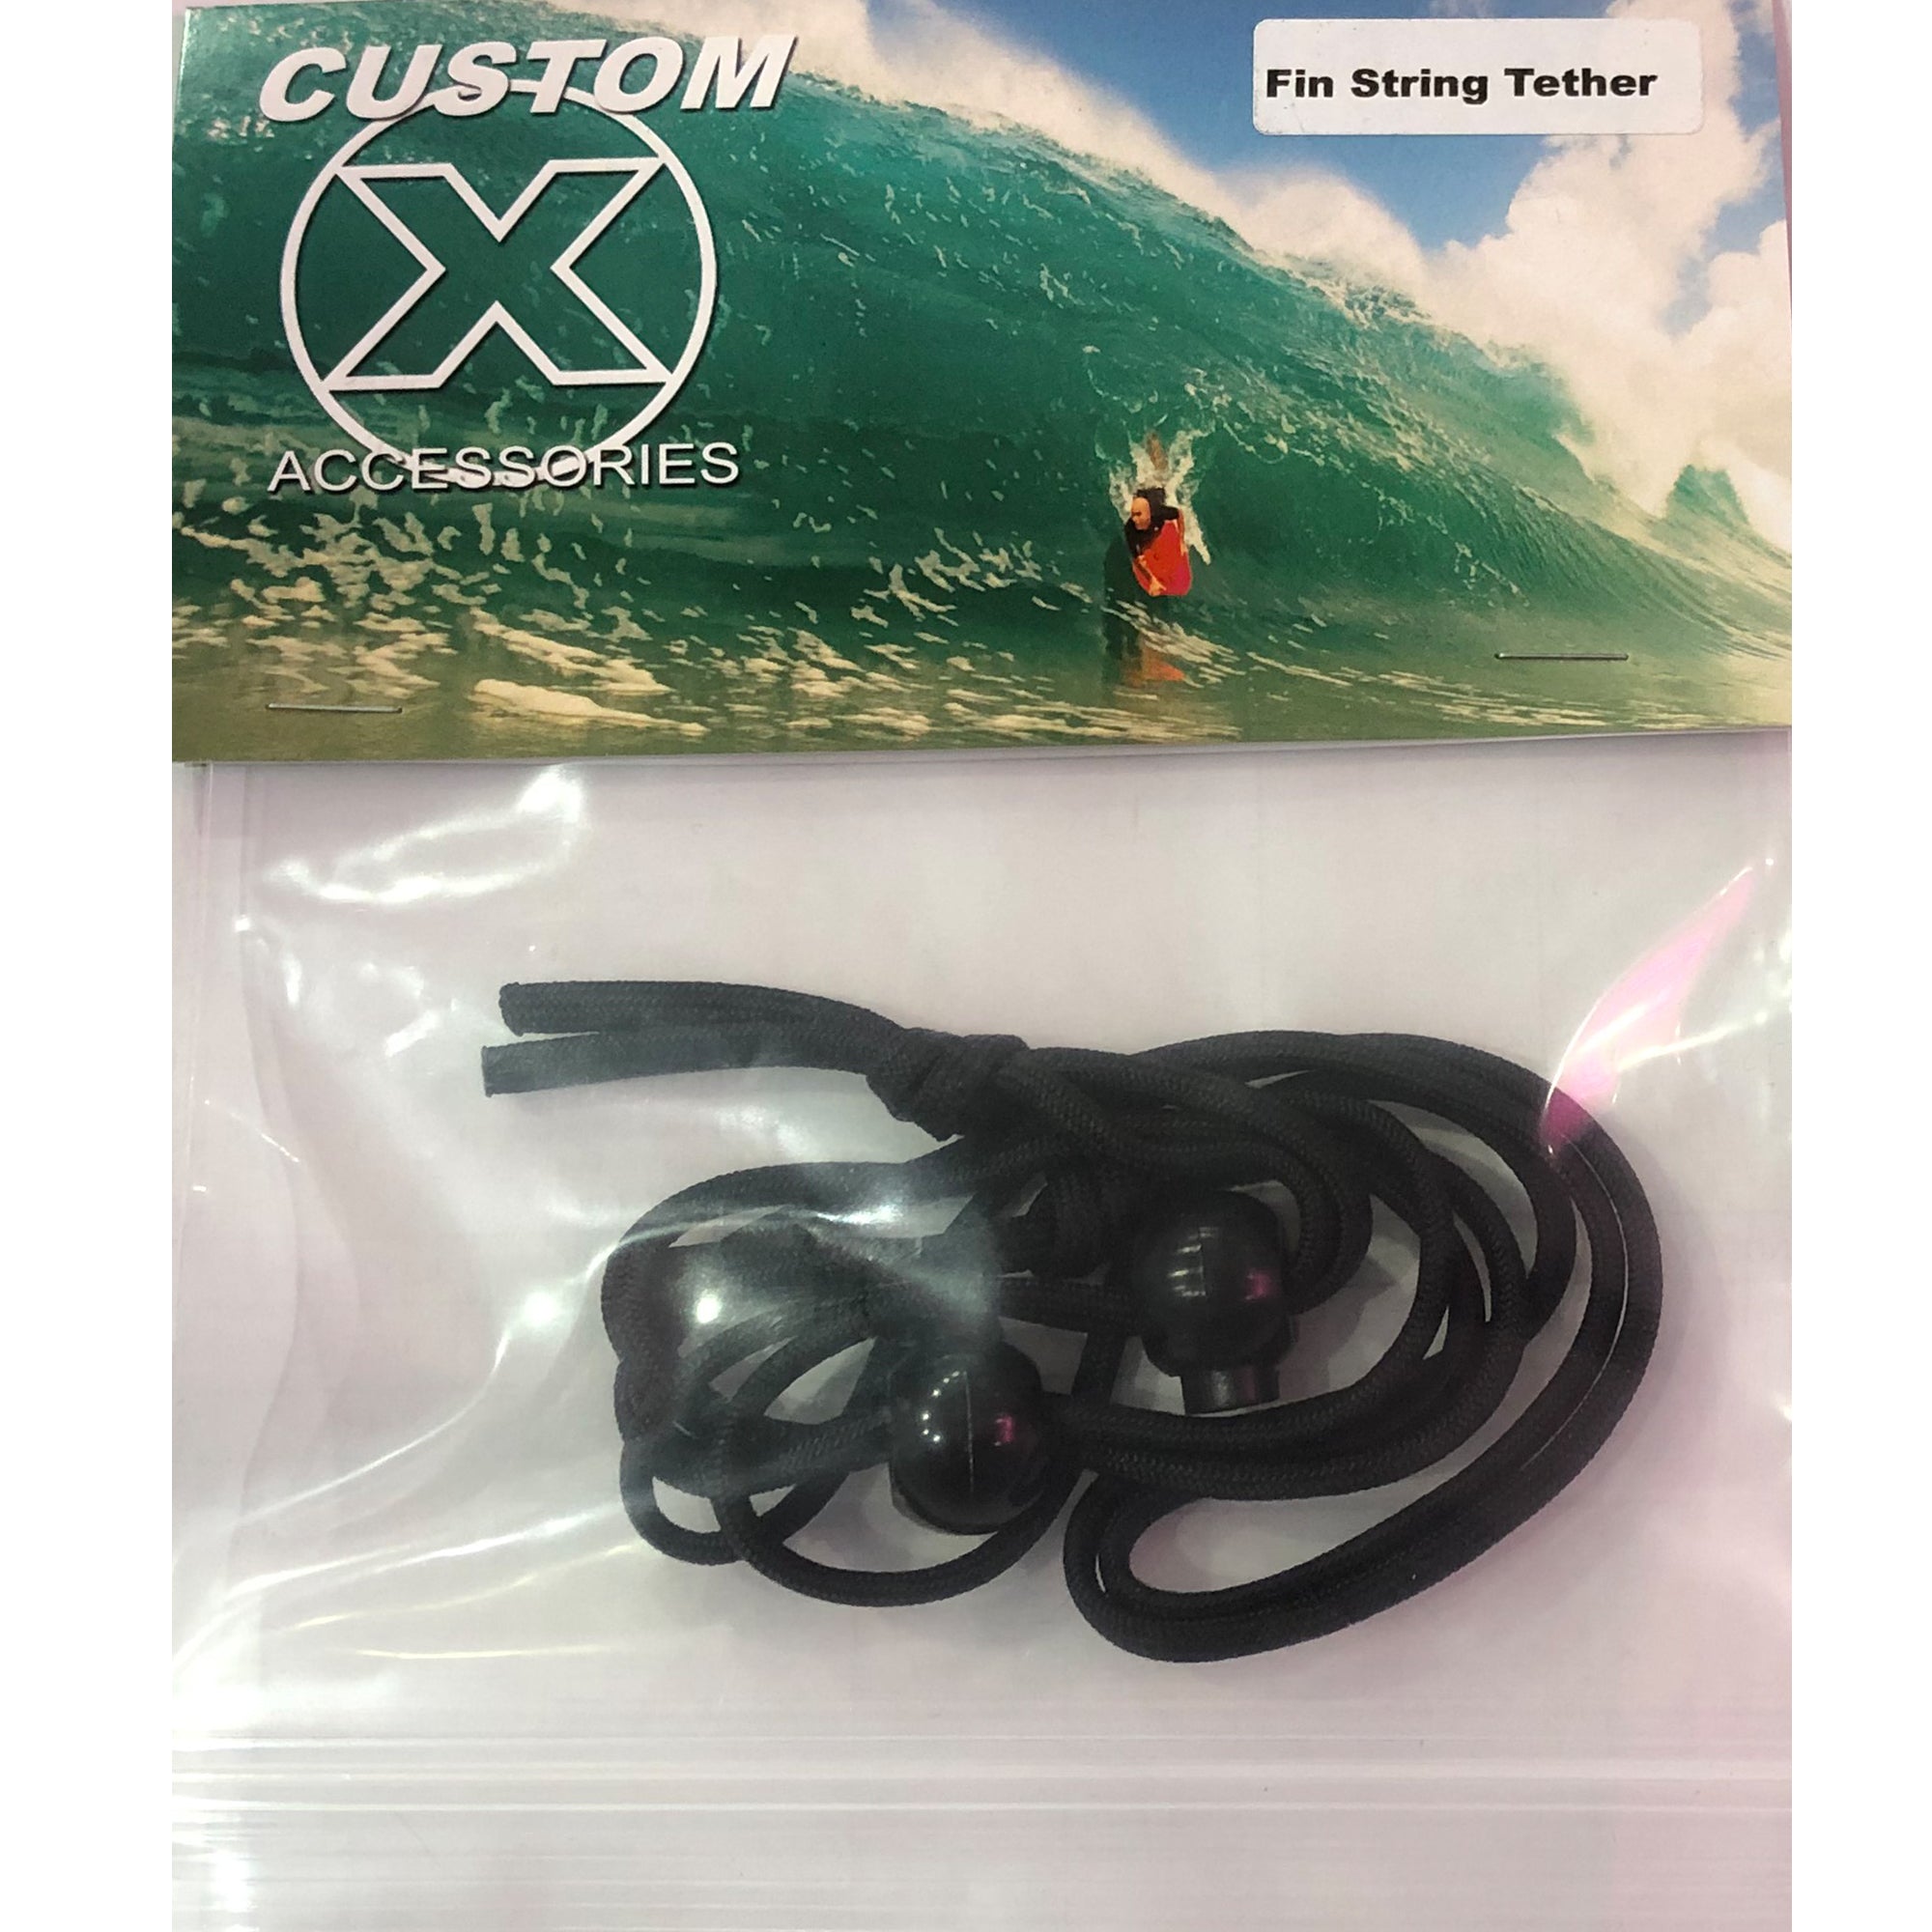 Custom X Fin String Teather